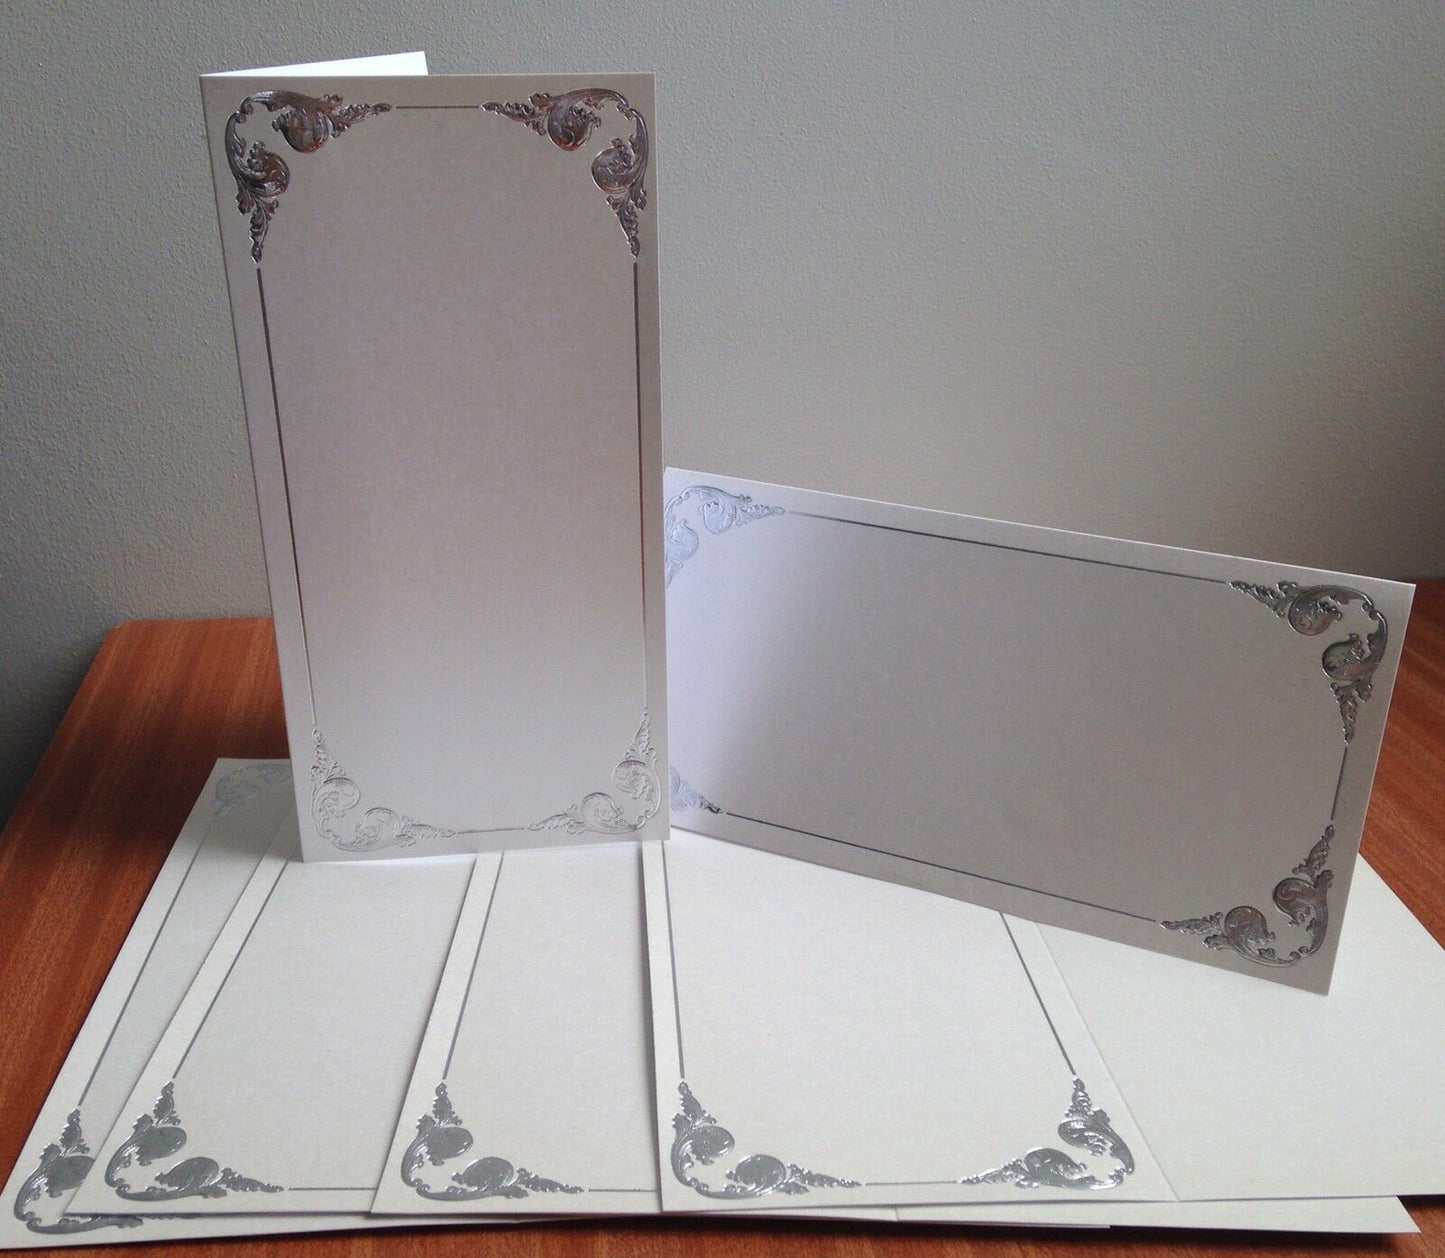 10 DL Pearl Card Blanks White Envelopes Silver Swirl Wedding Menu Invites Craft